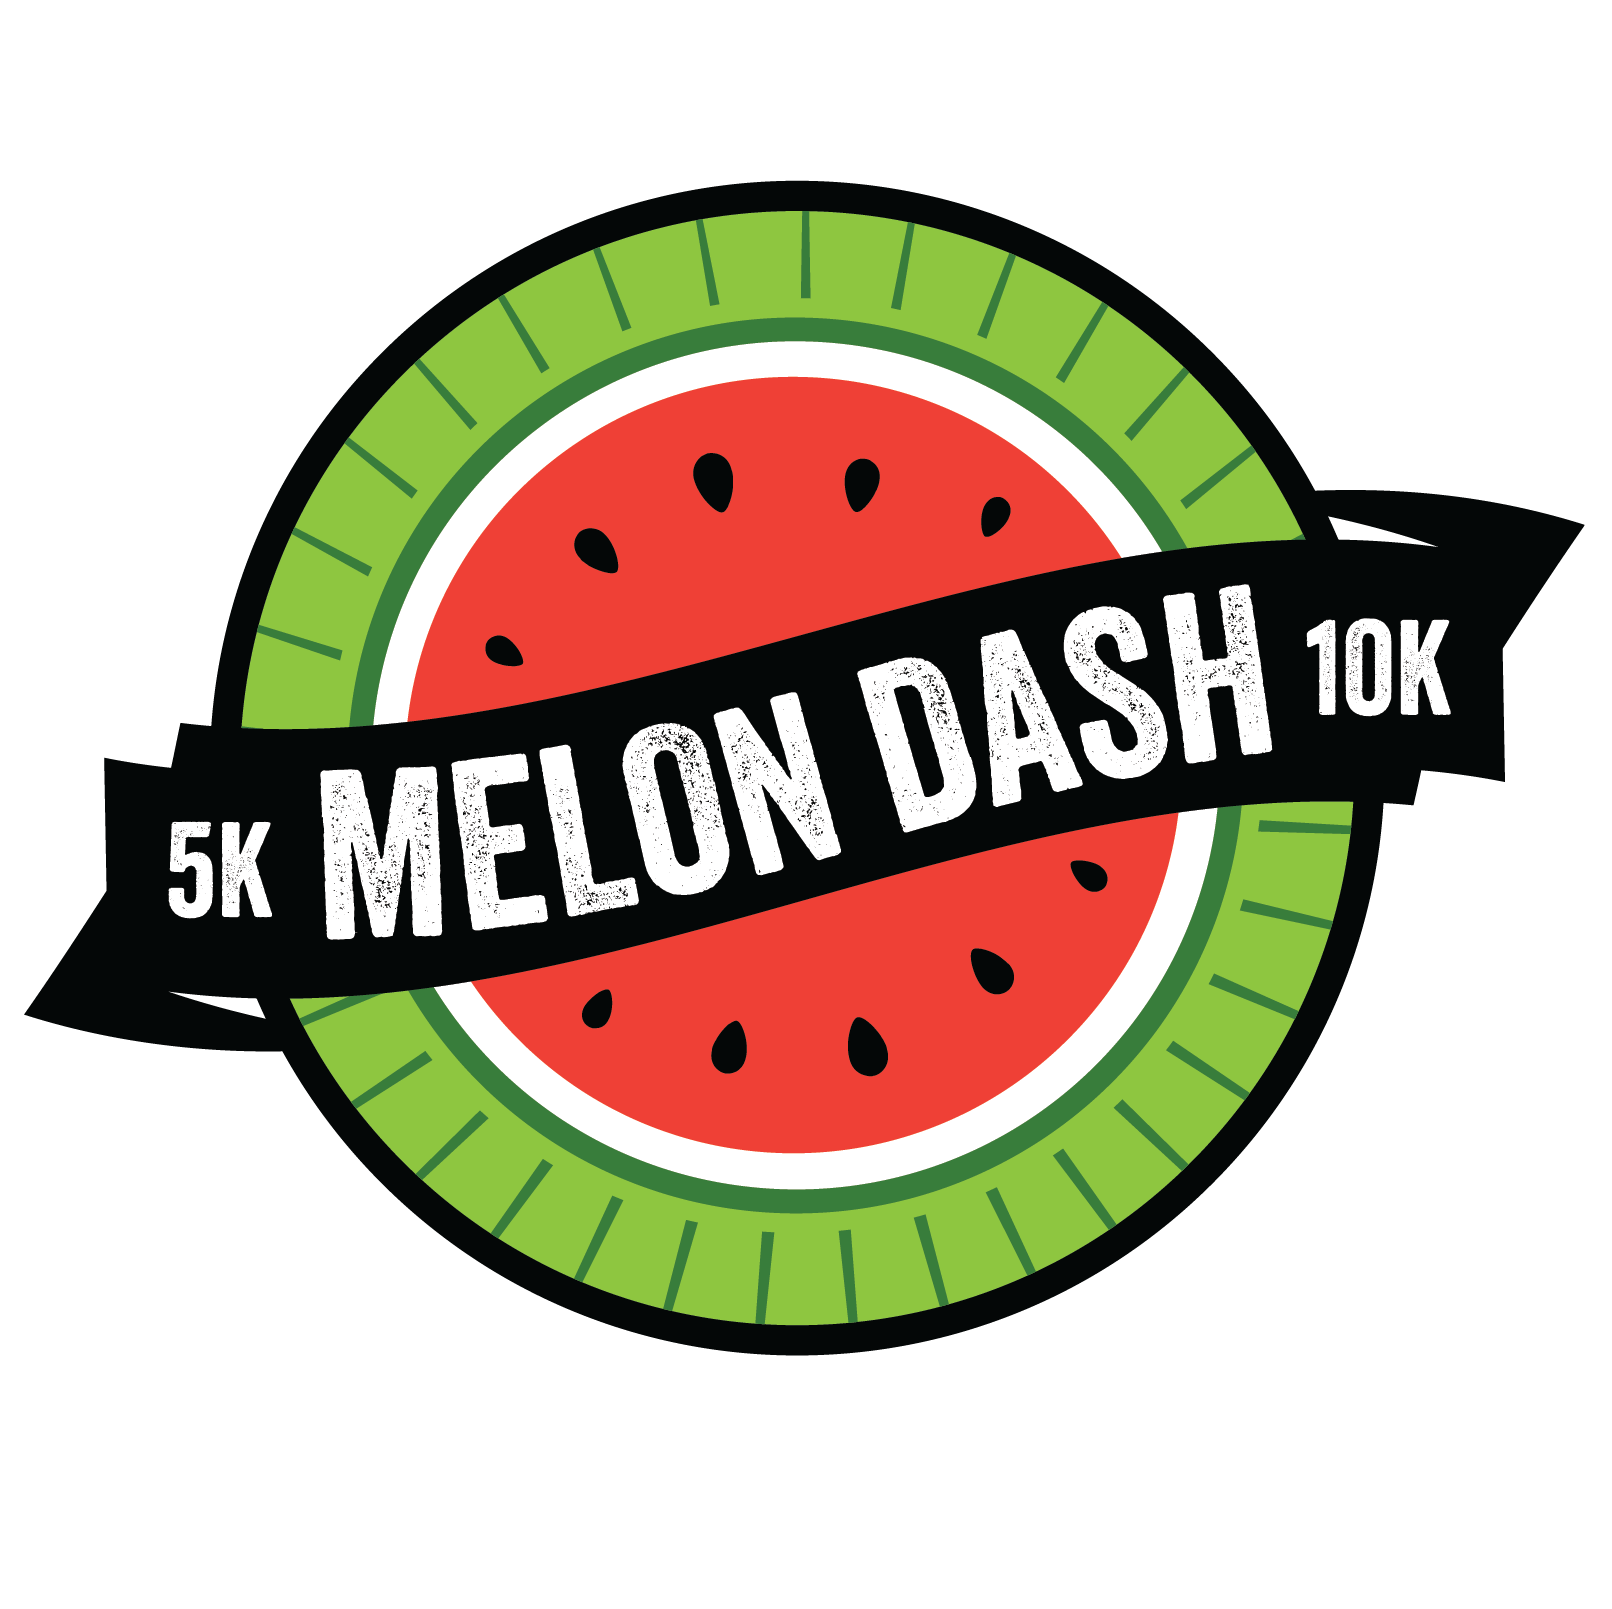 Melon Dash 5k 10k Fun Run Aug 1 2020 Mckinney Tx